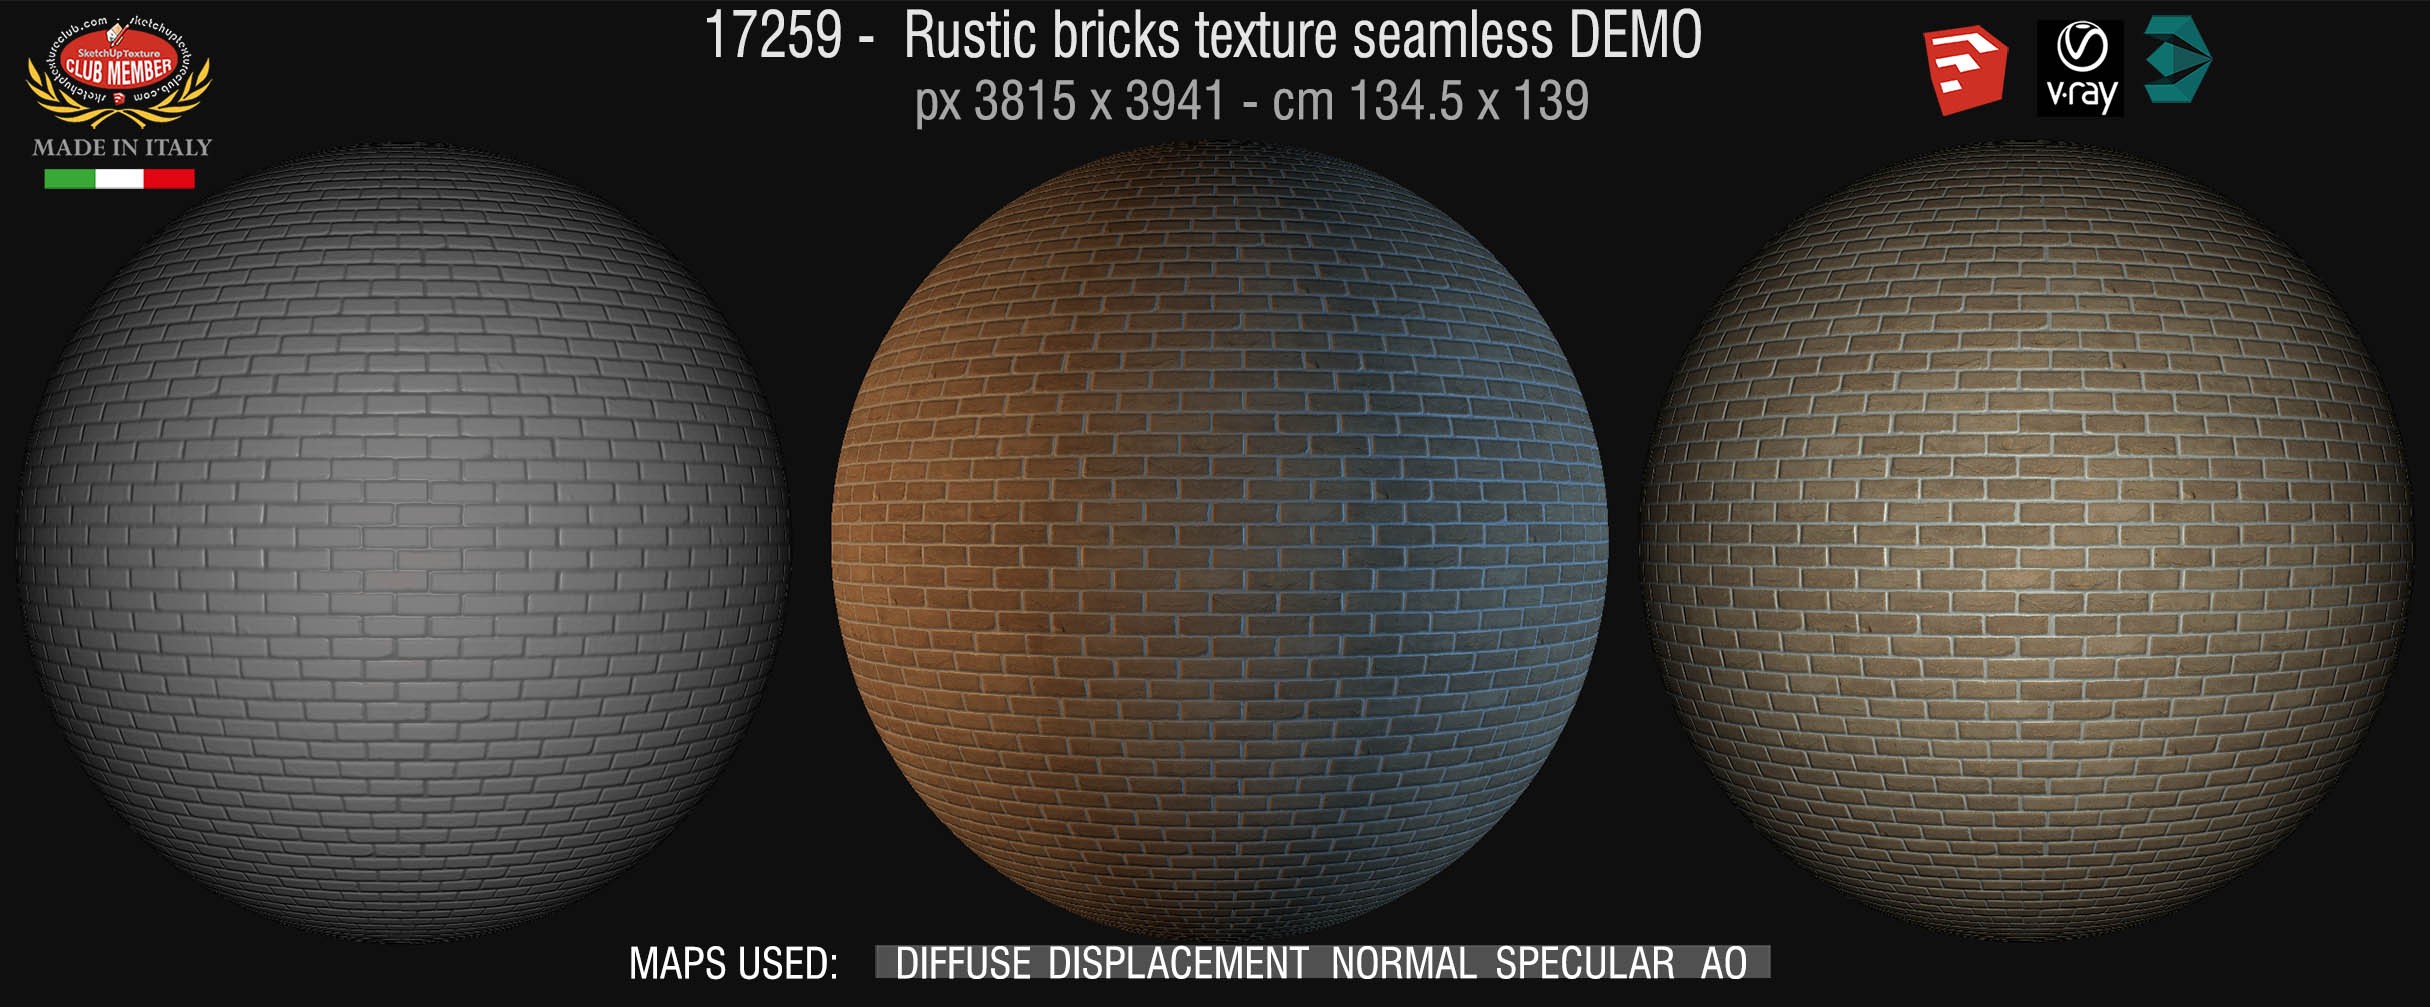 17259 Rustic bricks texture seamless + maps DEMO